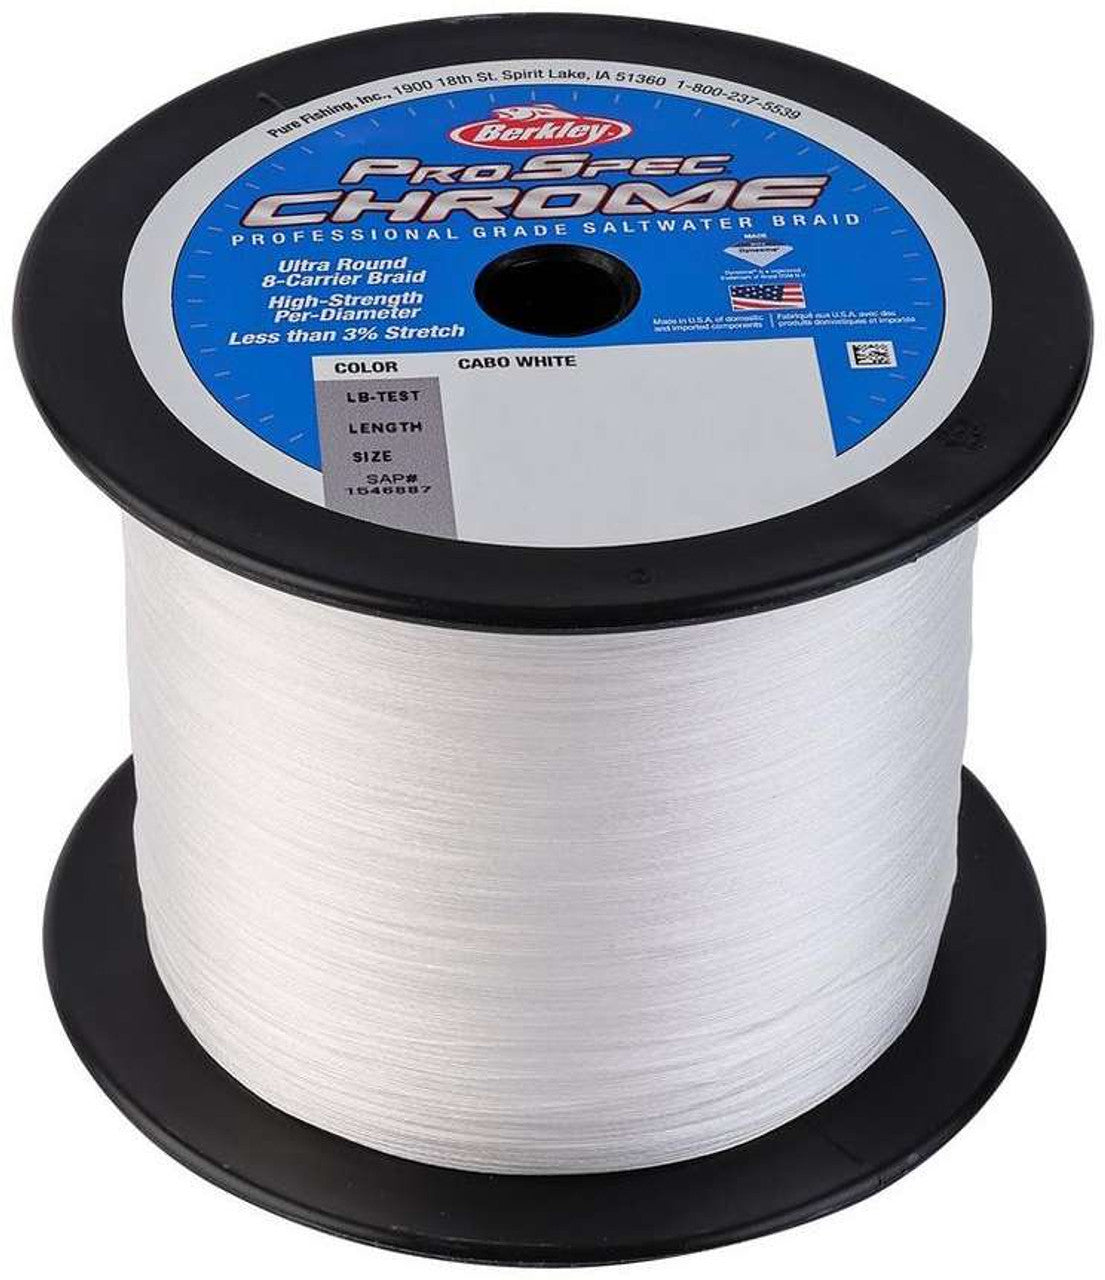 Silver Thread AN40™ Green 10 lb. Copolymer Fishing Line 